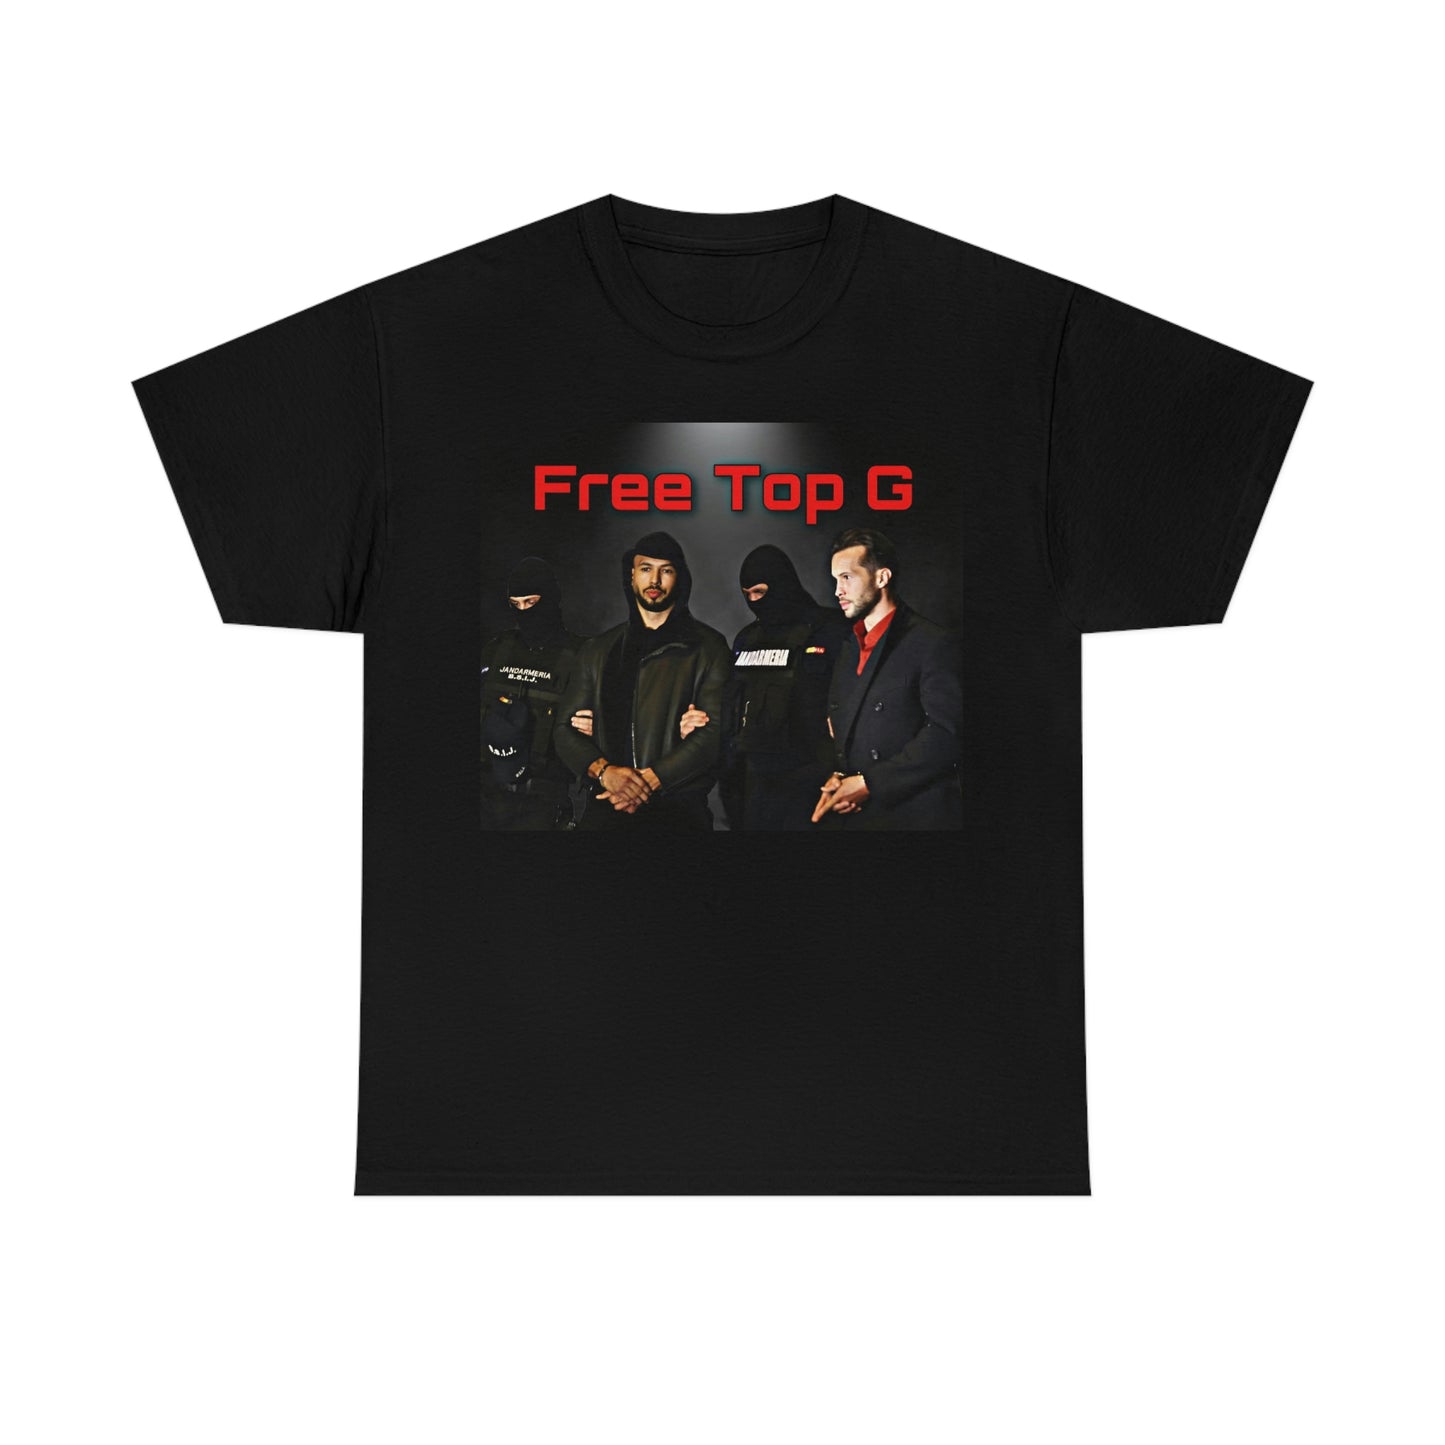 Free Top G Shirt